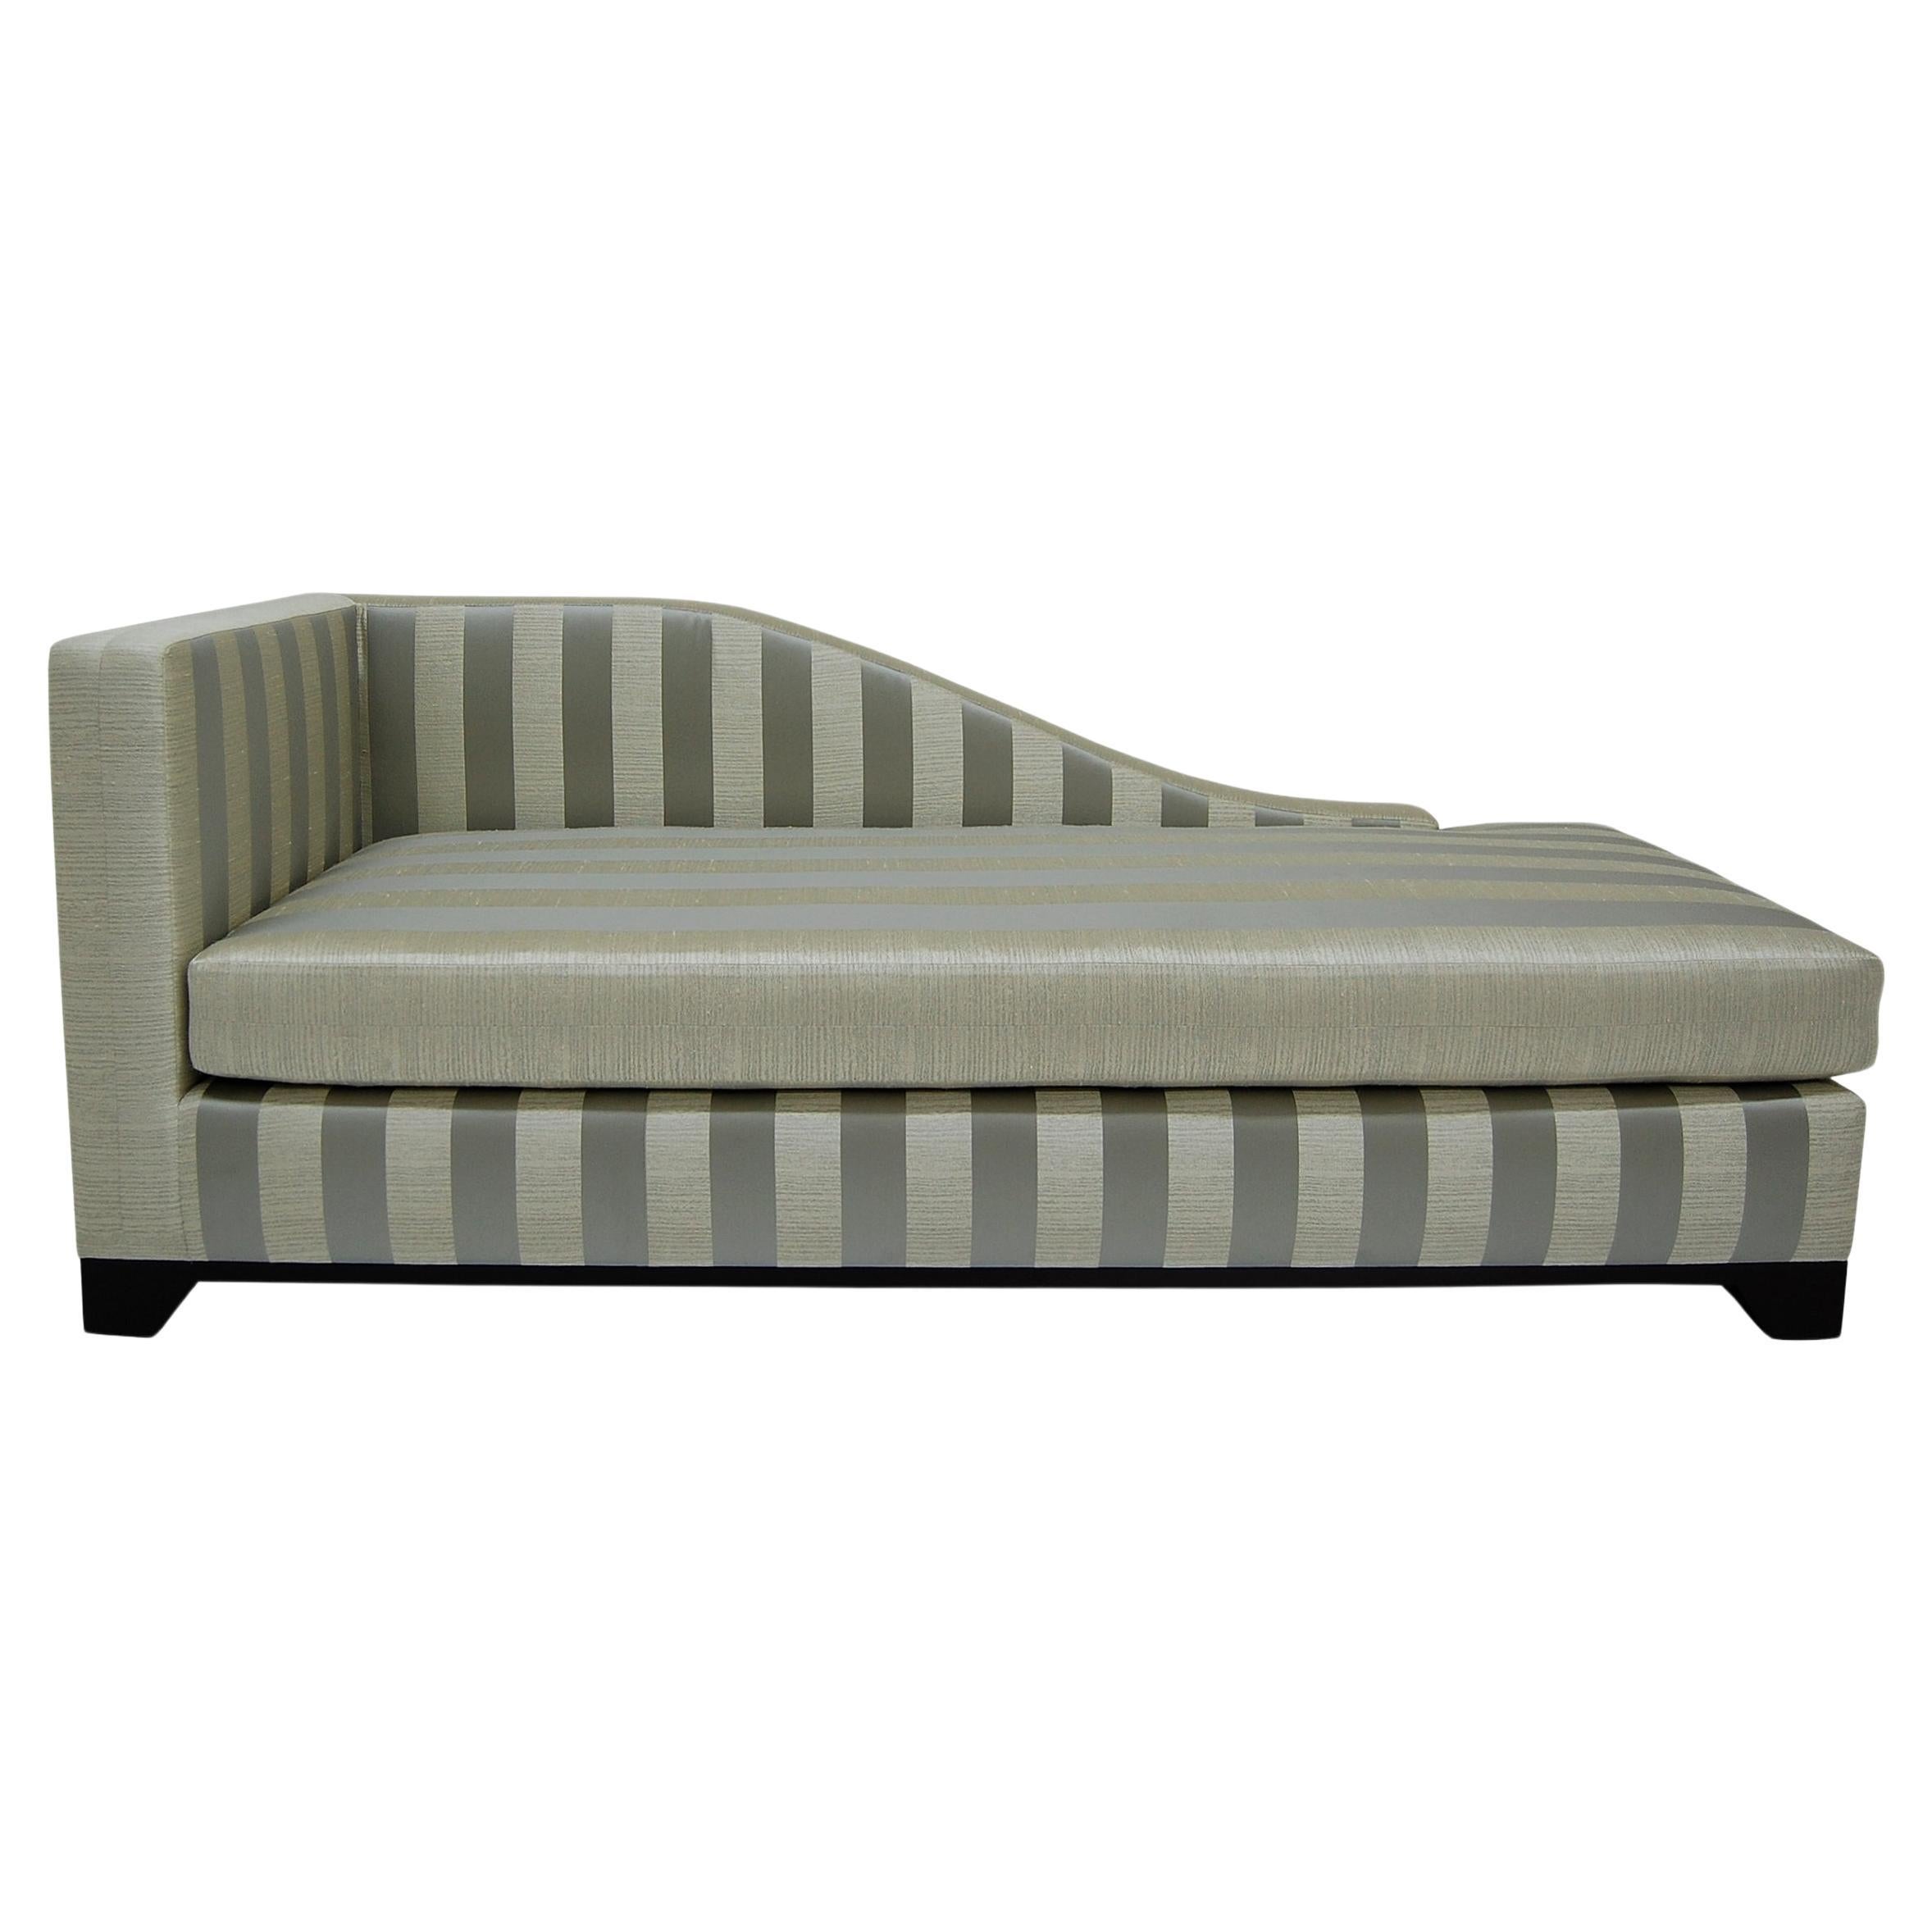 Sprawl Chaise Lounge -Upholstery, Wood Base, Loose Cushion, Tight & Rounded Back